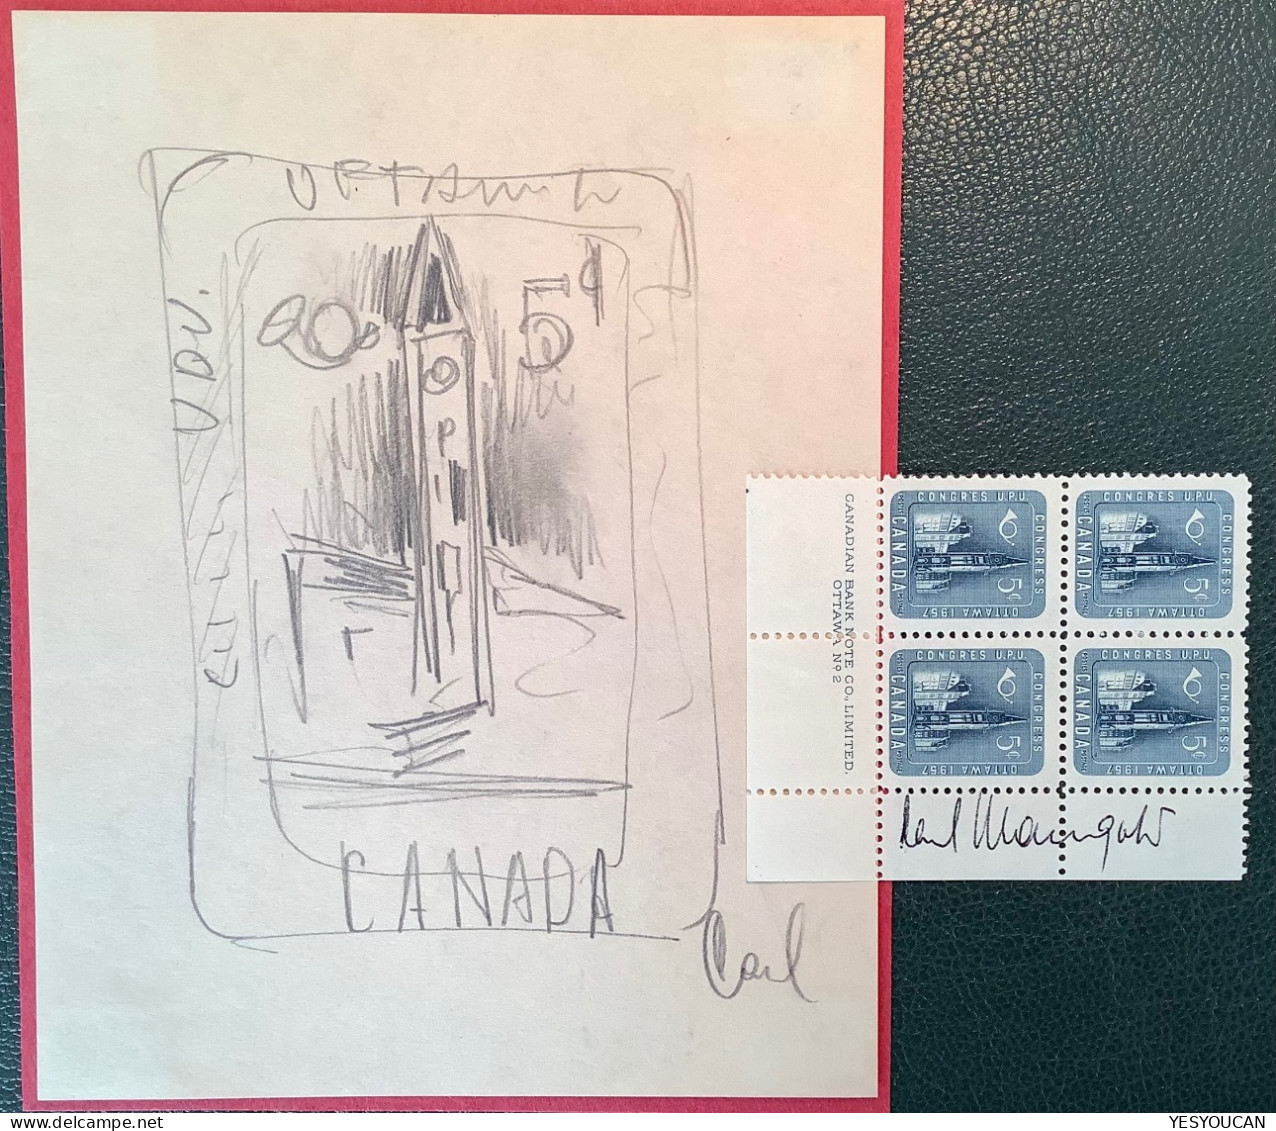 Canada Hand-drawn Essay 5c UPU CONGRESS OTTAWA 1957 Signed By Artist + Stamp, Ex Severin UPU Coll. Corinphila2012 (Proof - Neufs